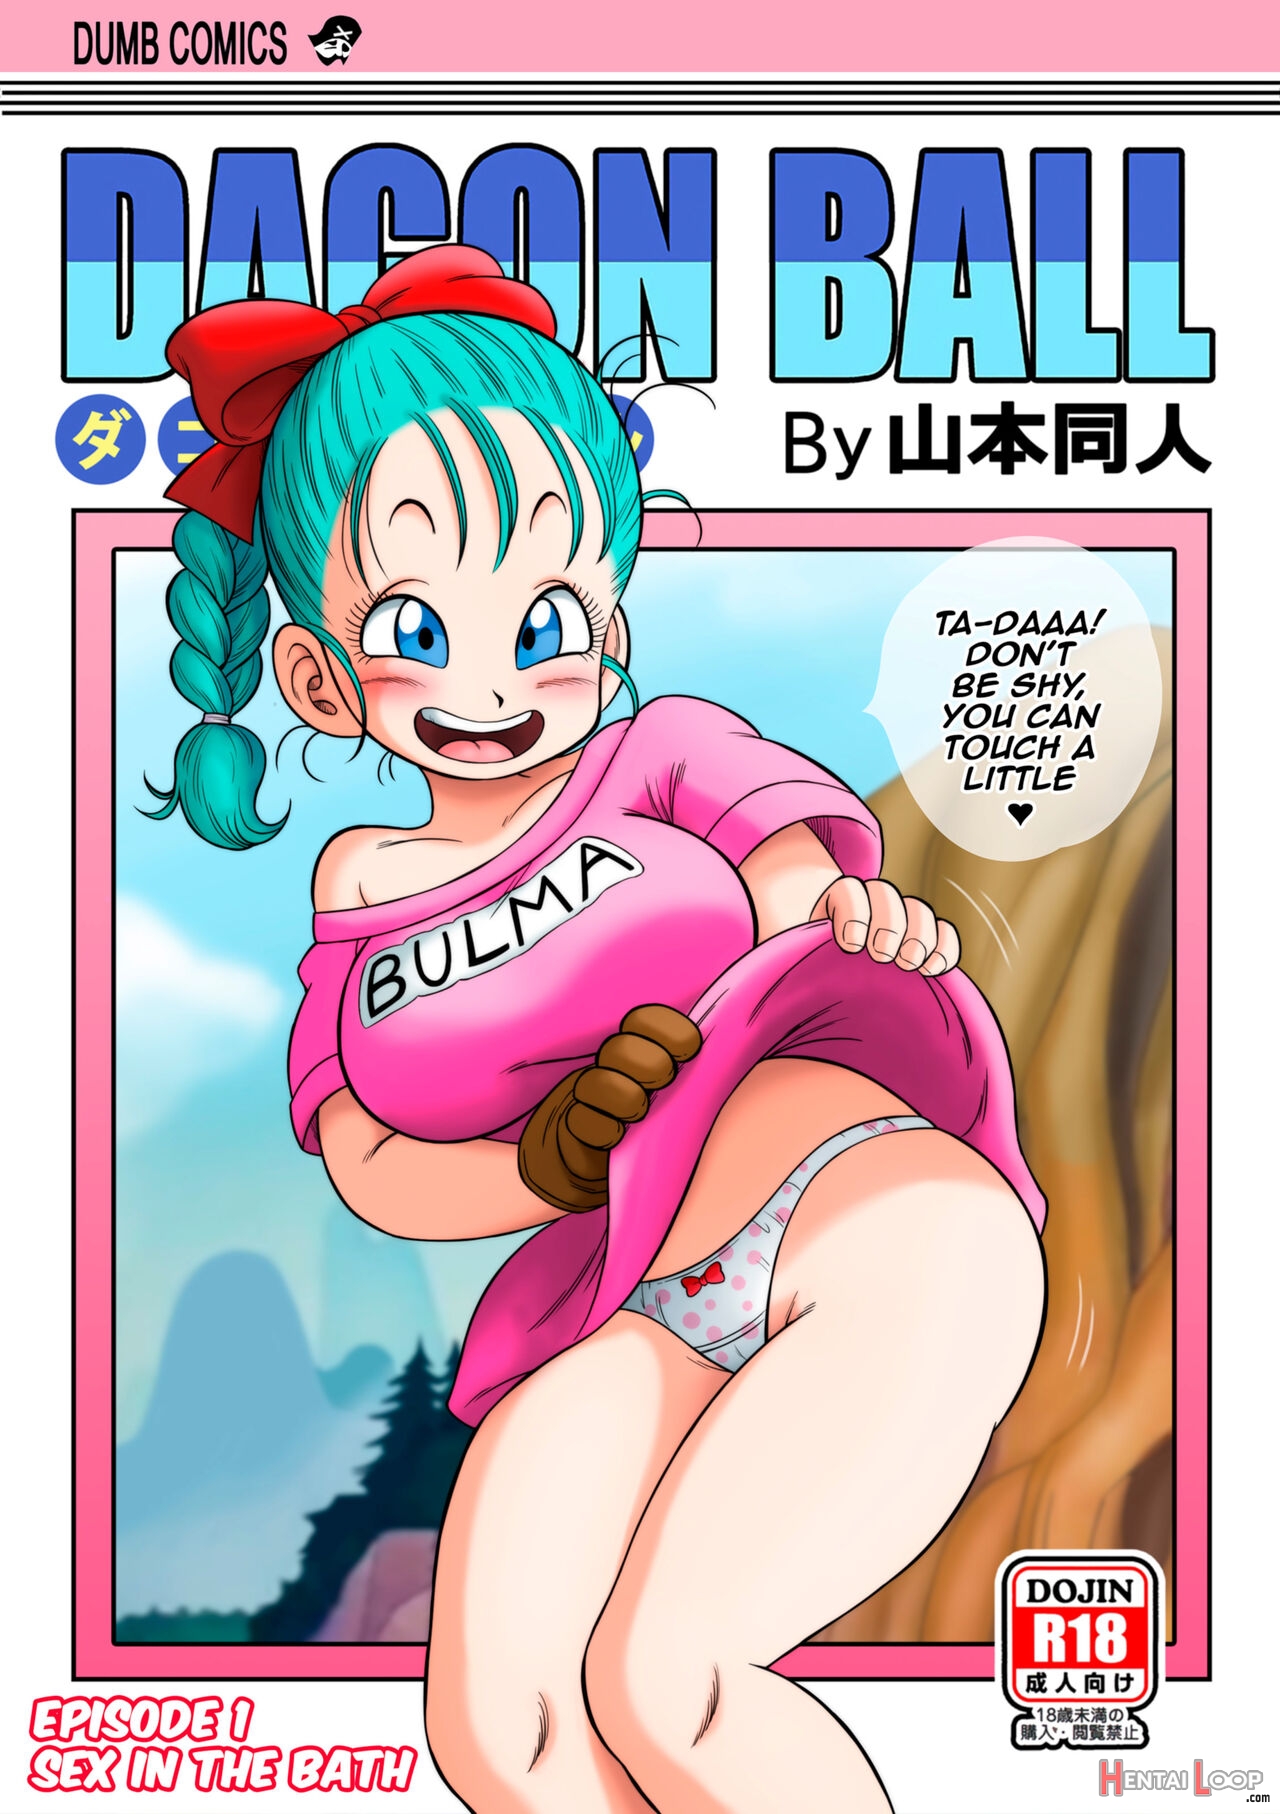 Bulma naked manga